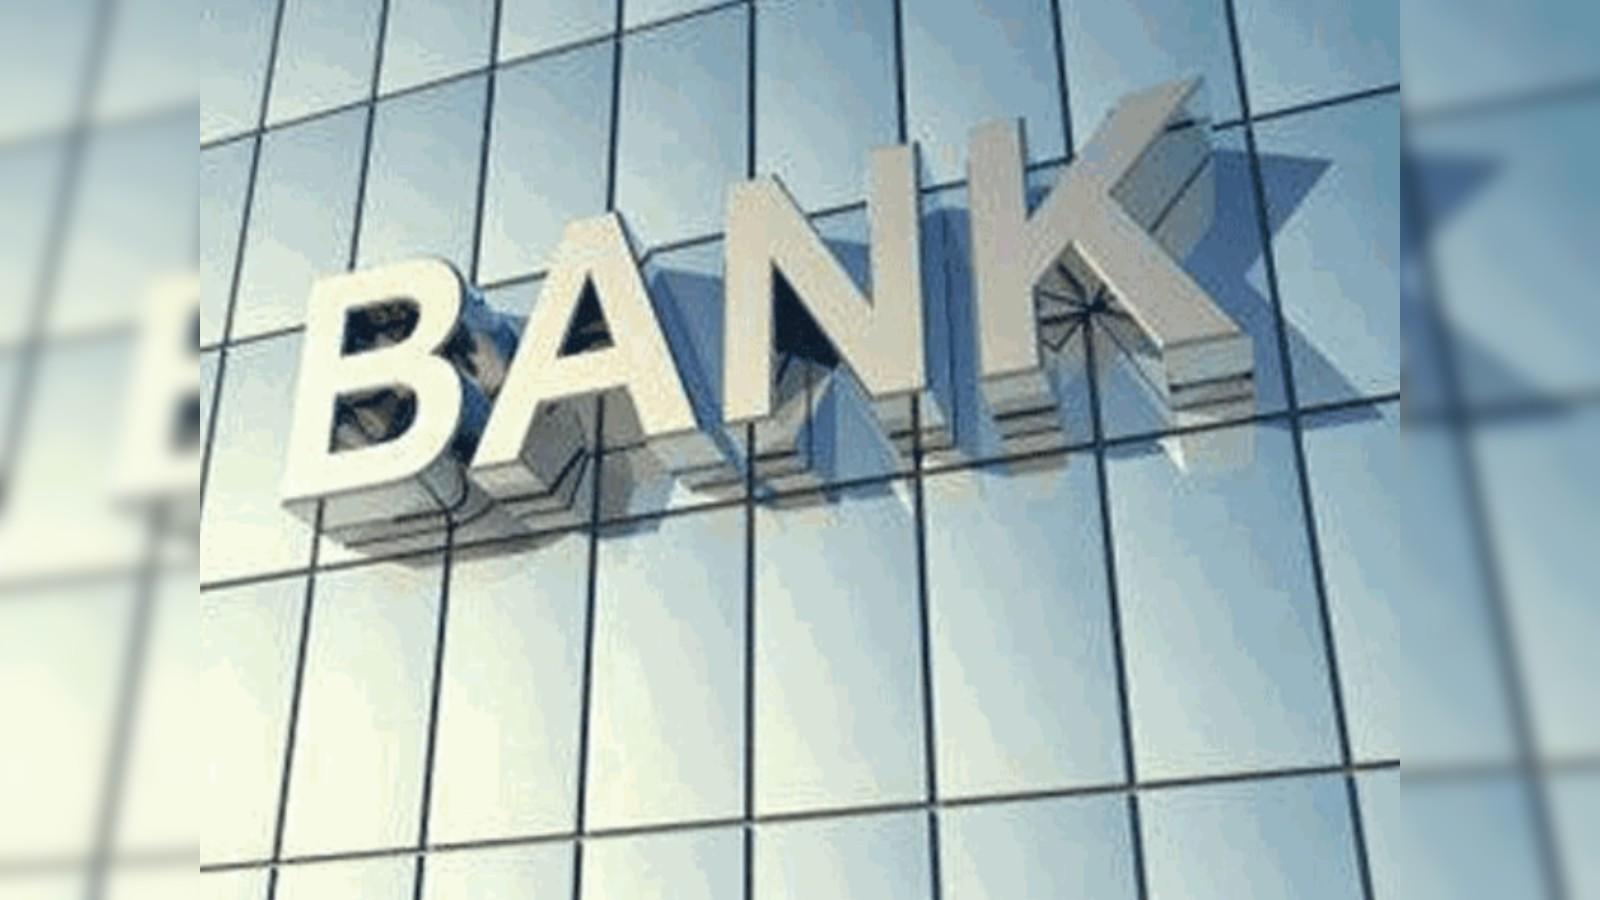 PSB Alliance : Doorstep Banking